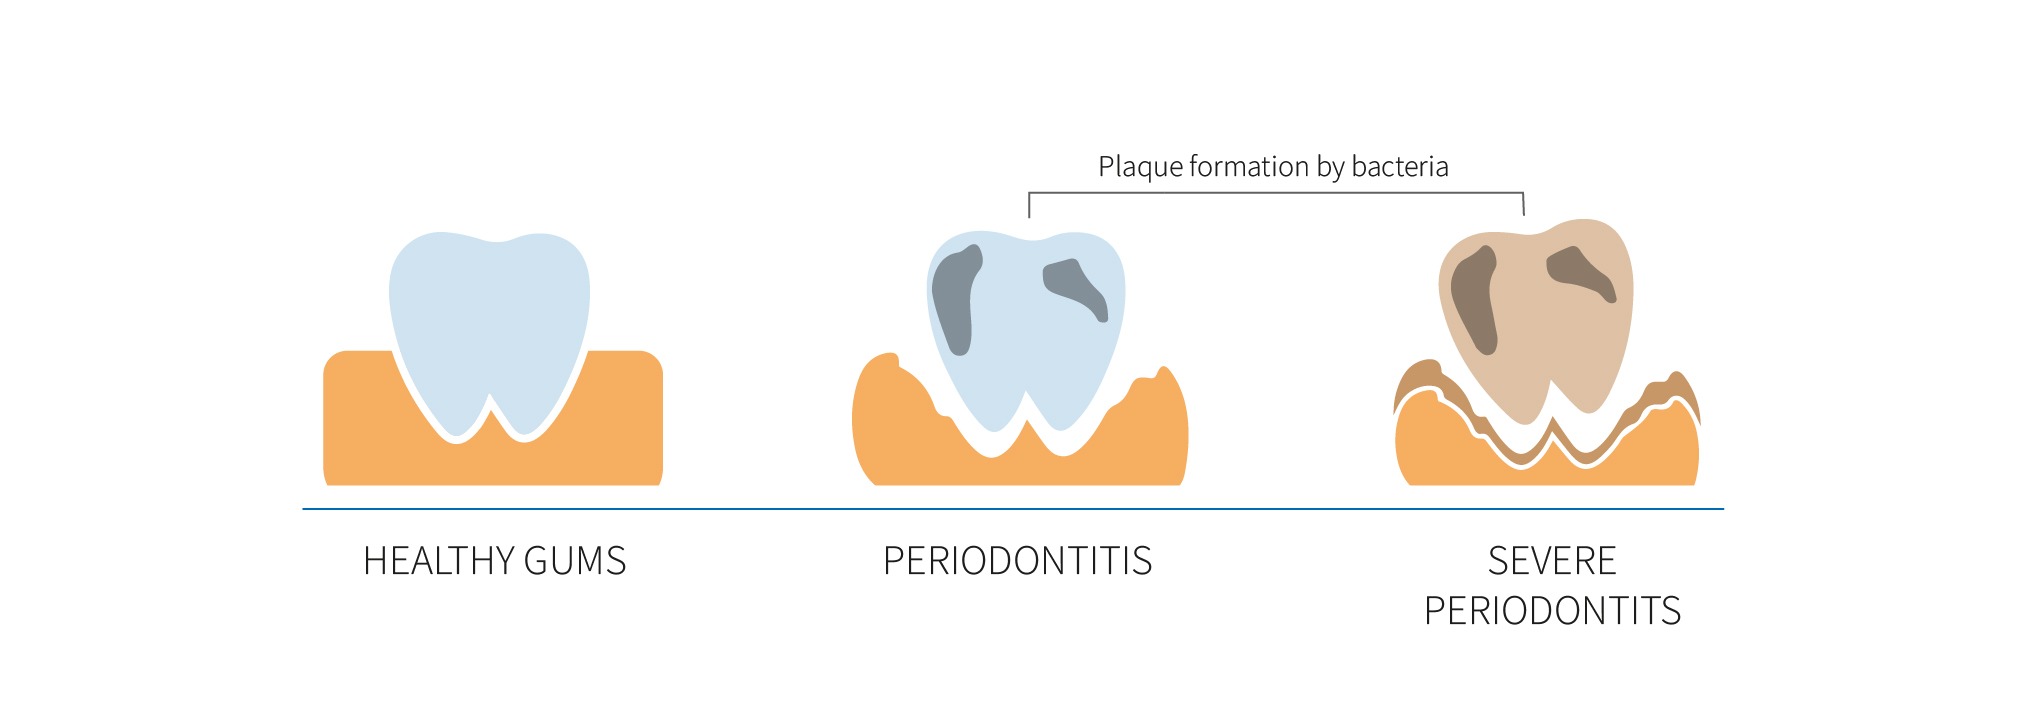 Periodontitis symptoms